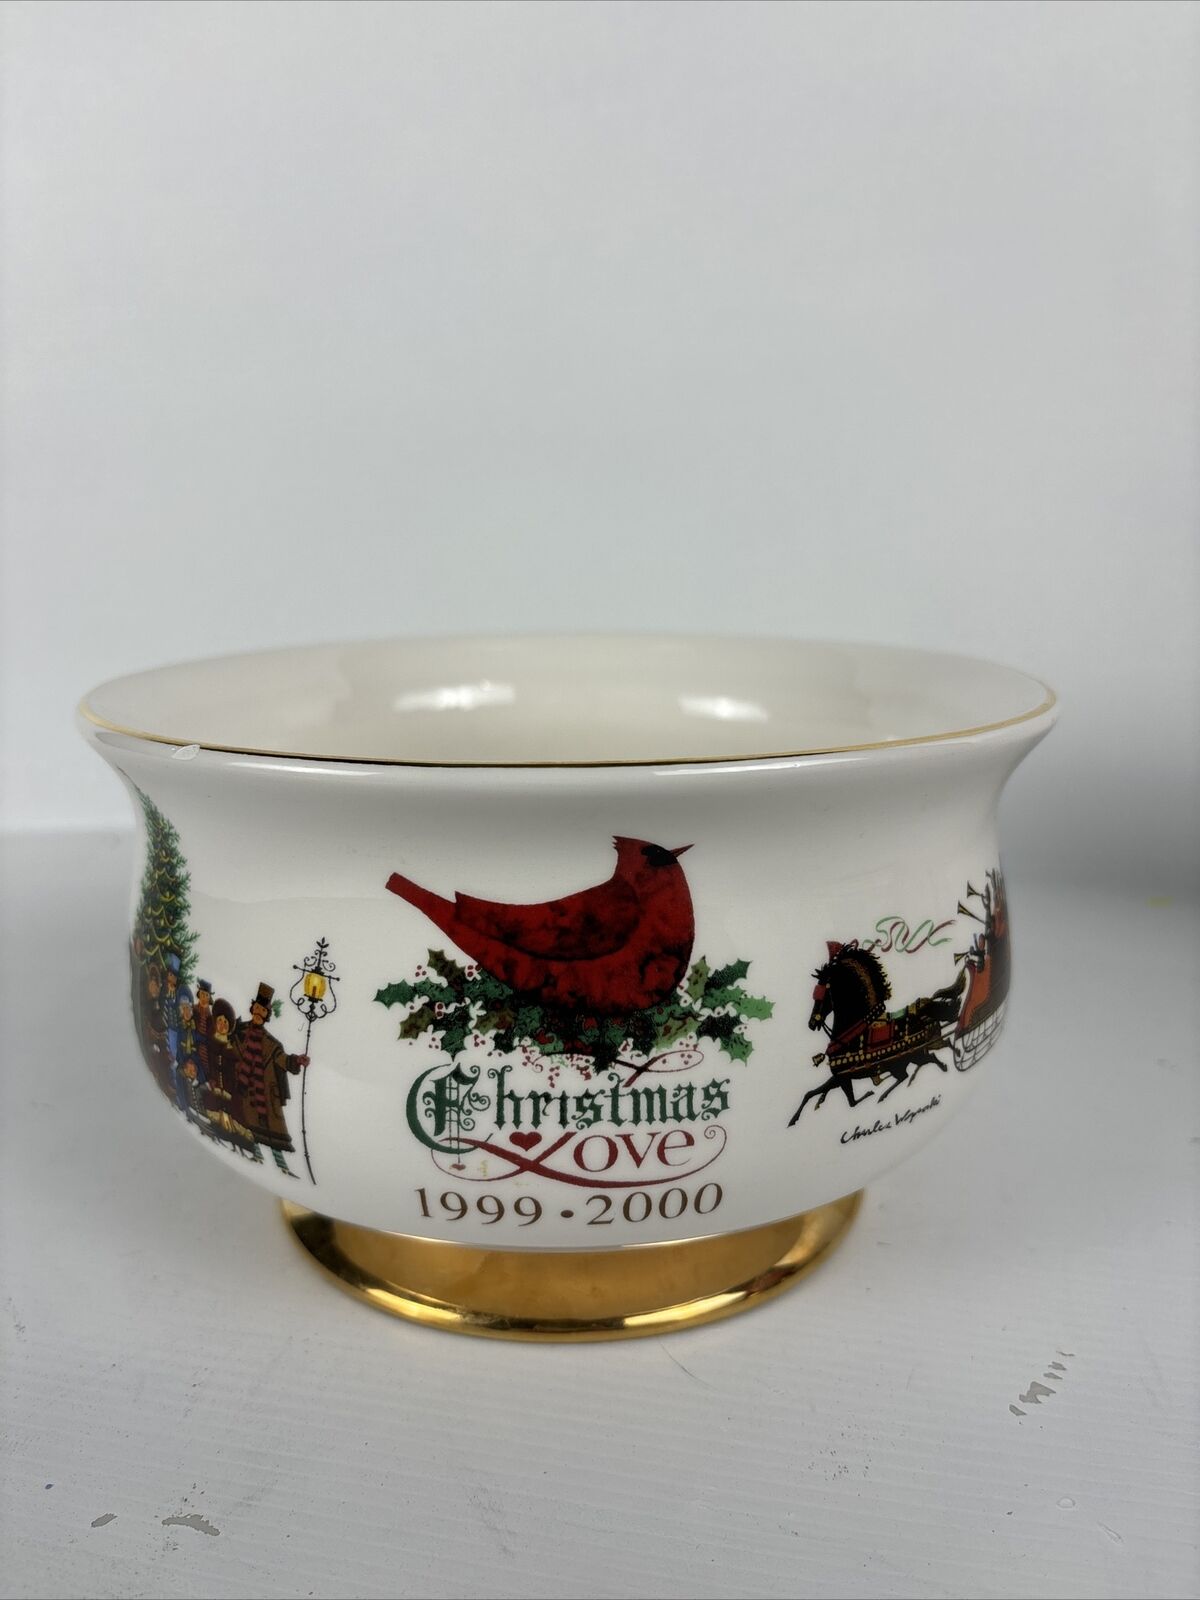 WYSOCKI Teleflora Gift Christmas 1999 - 2000 Ceramic Love Bowl With Gold Base